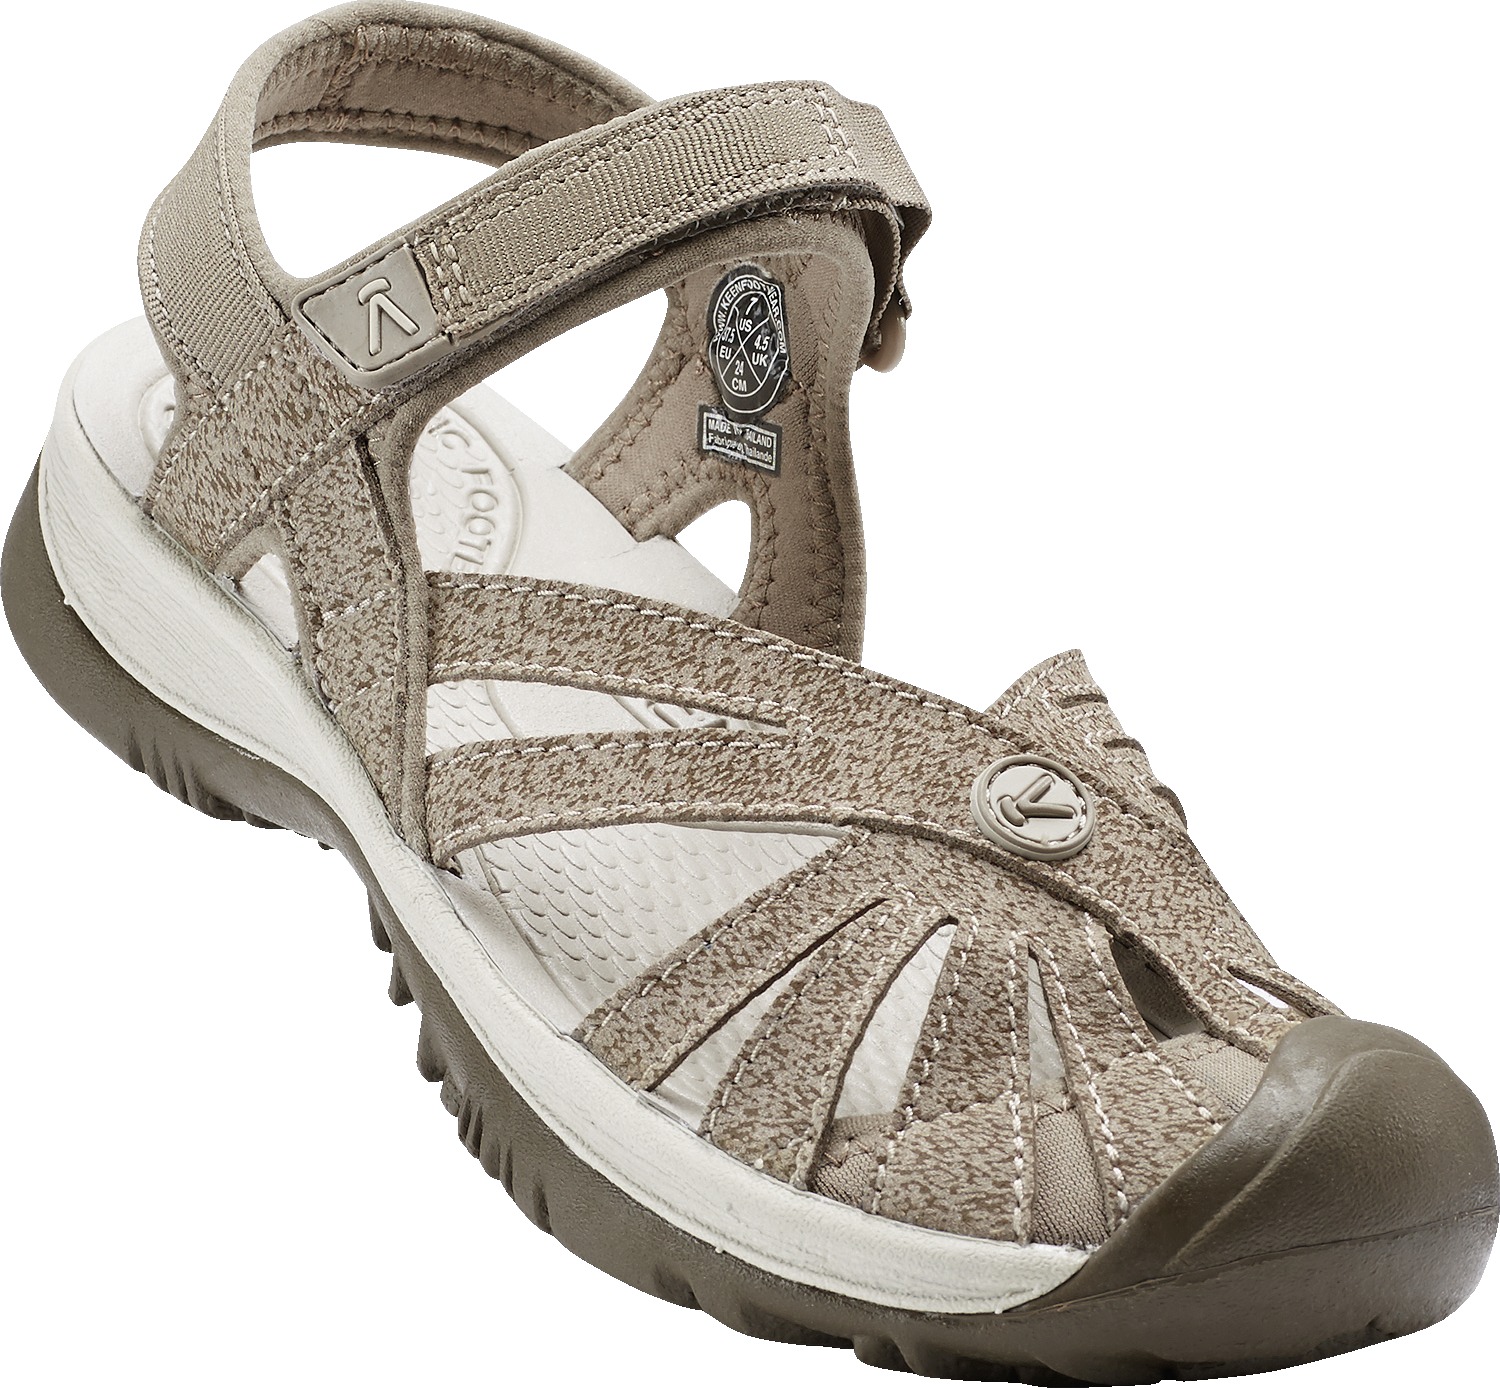 Keen dámské sandály Rose Sandal Women - Brindle/Shitake Barva: brindle/shitake, Velikost: 5,5 UK (38,5 EU / 25 cm)